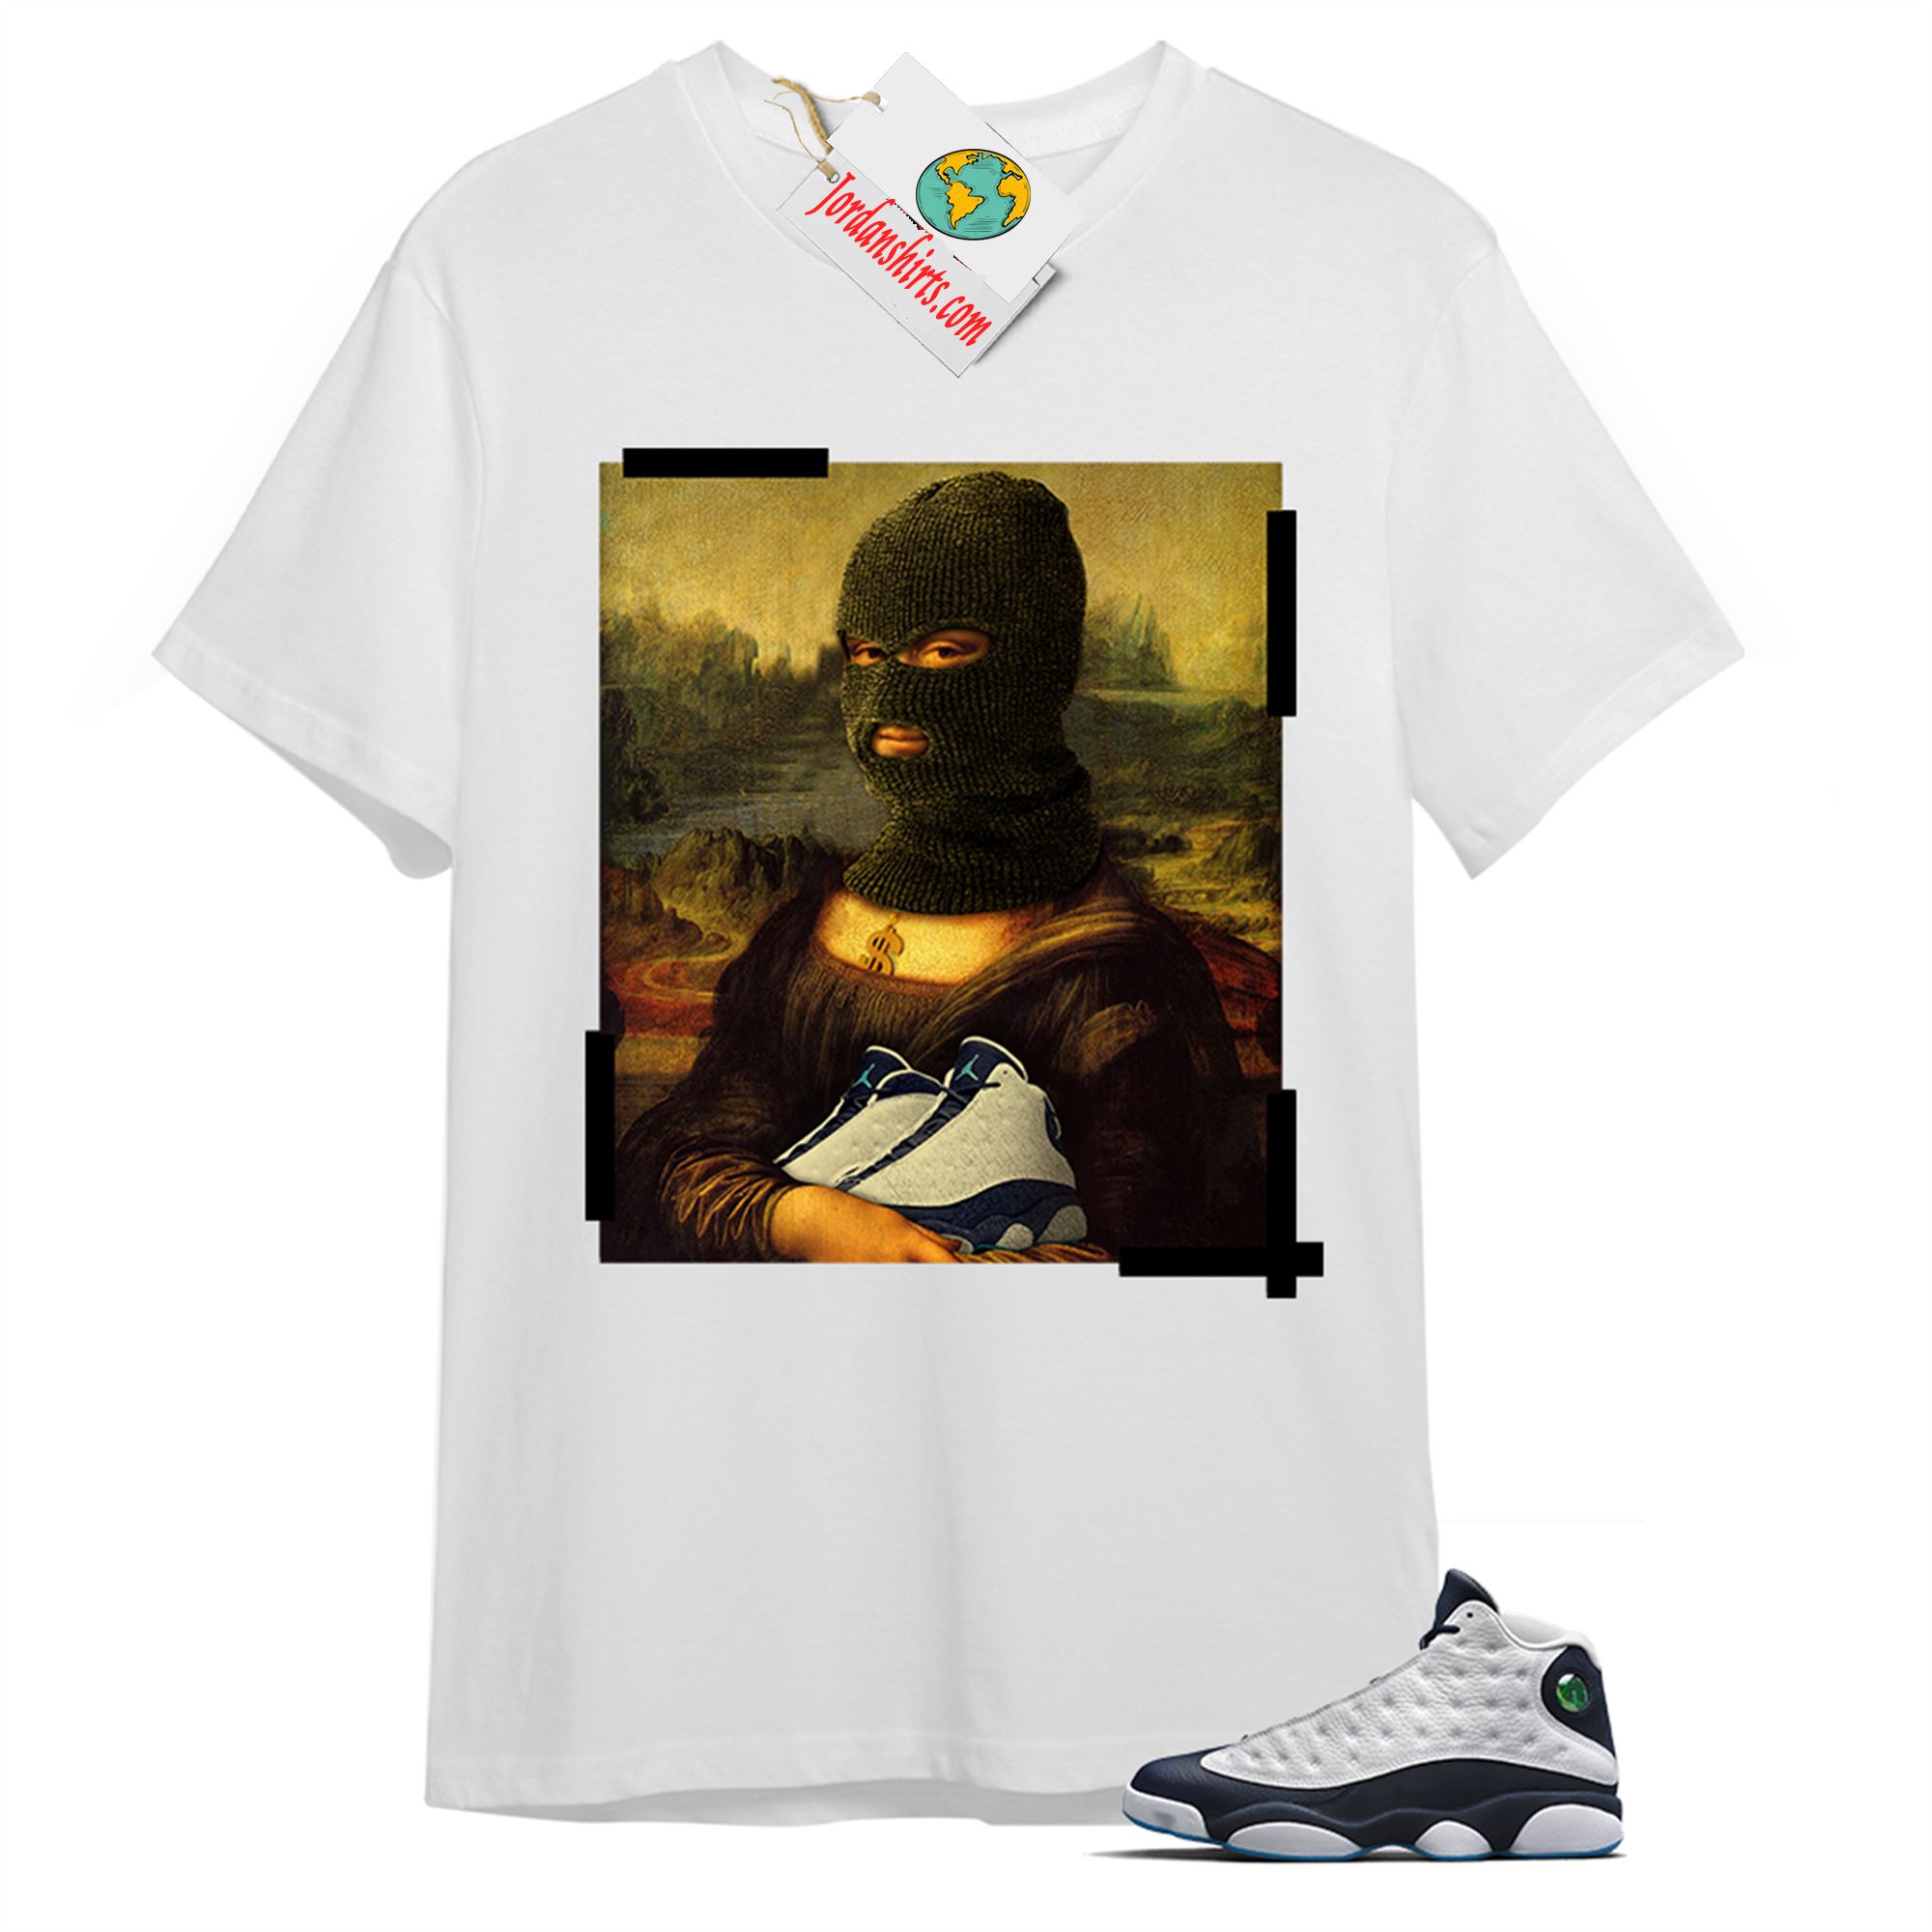 Jordan 13 Shirt, Off White Mona Lisa White T-shirt Air Jordan 13 Obsidian 13s Size Up To 5xl